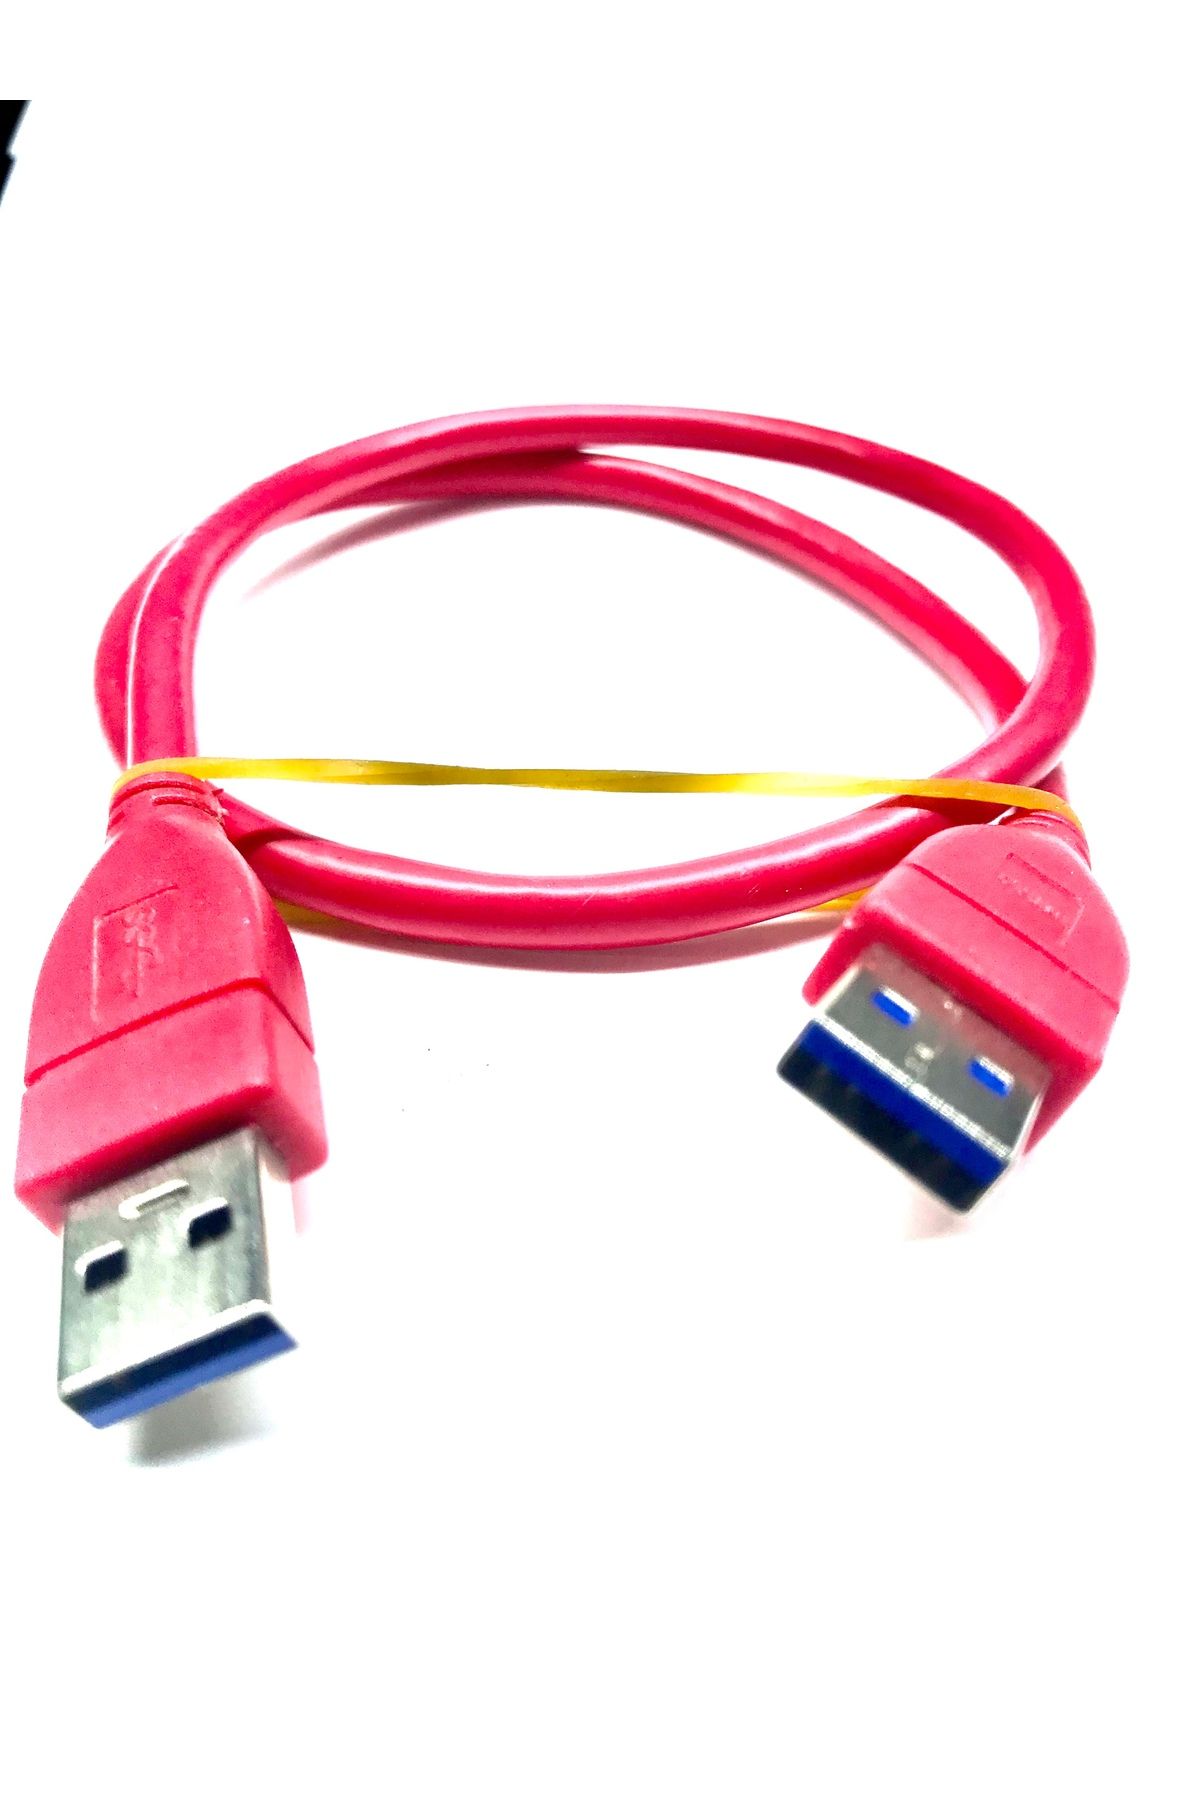 OEM İki ucu erkek USB 3.0 kablo